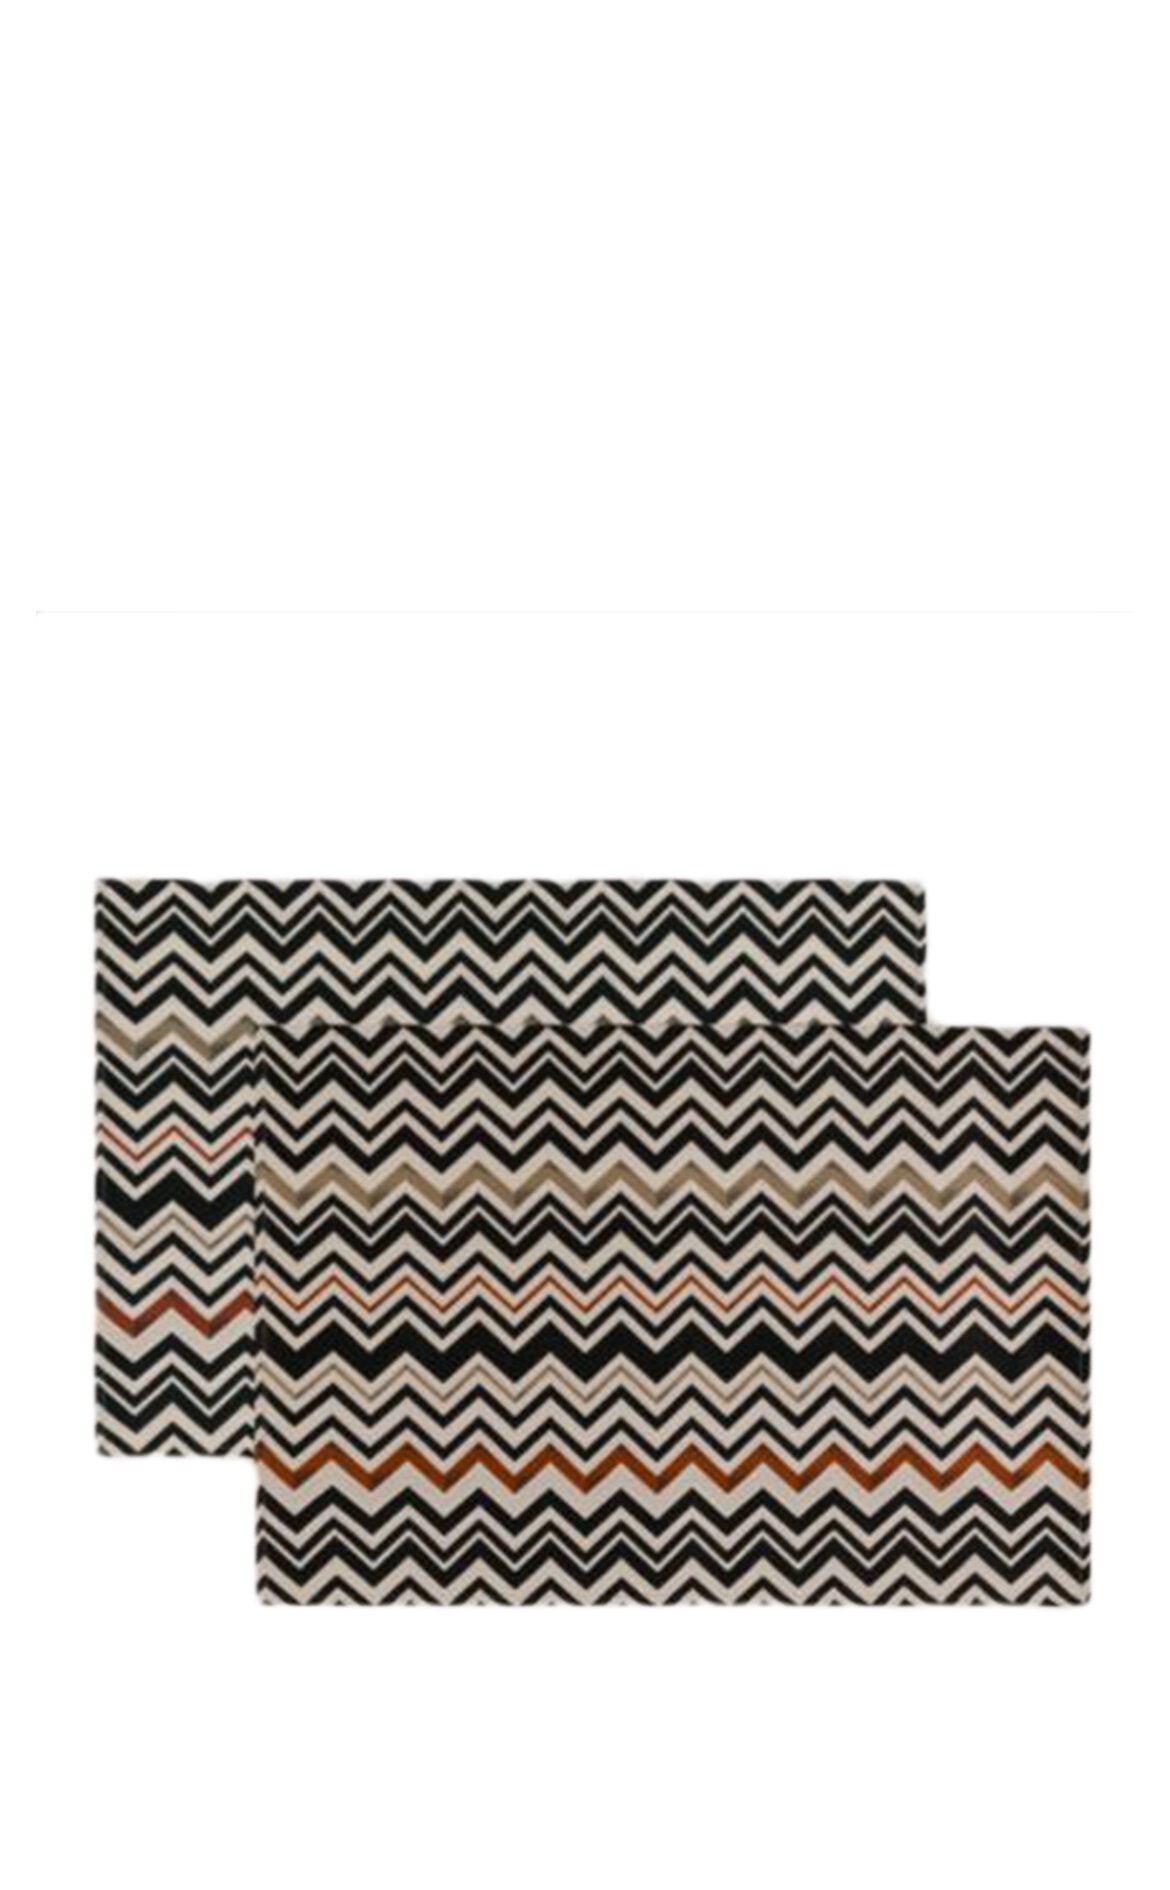 MISSONI HOME Belfast 160 - Siyah-Bej Zigzag Desen Amerikan Servis 2'li Set 38 x 52 cm D’Maison 